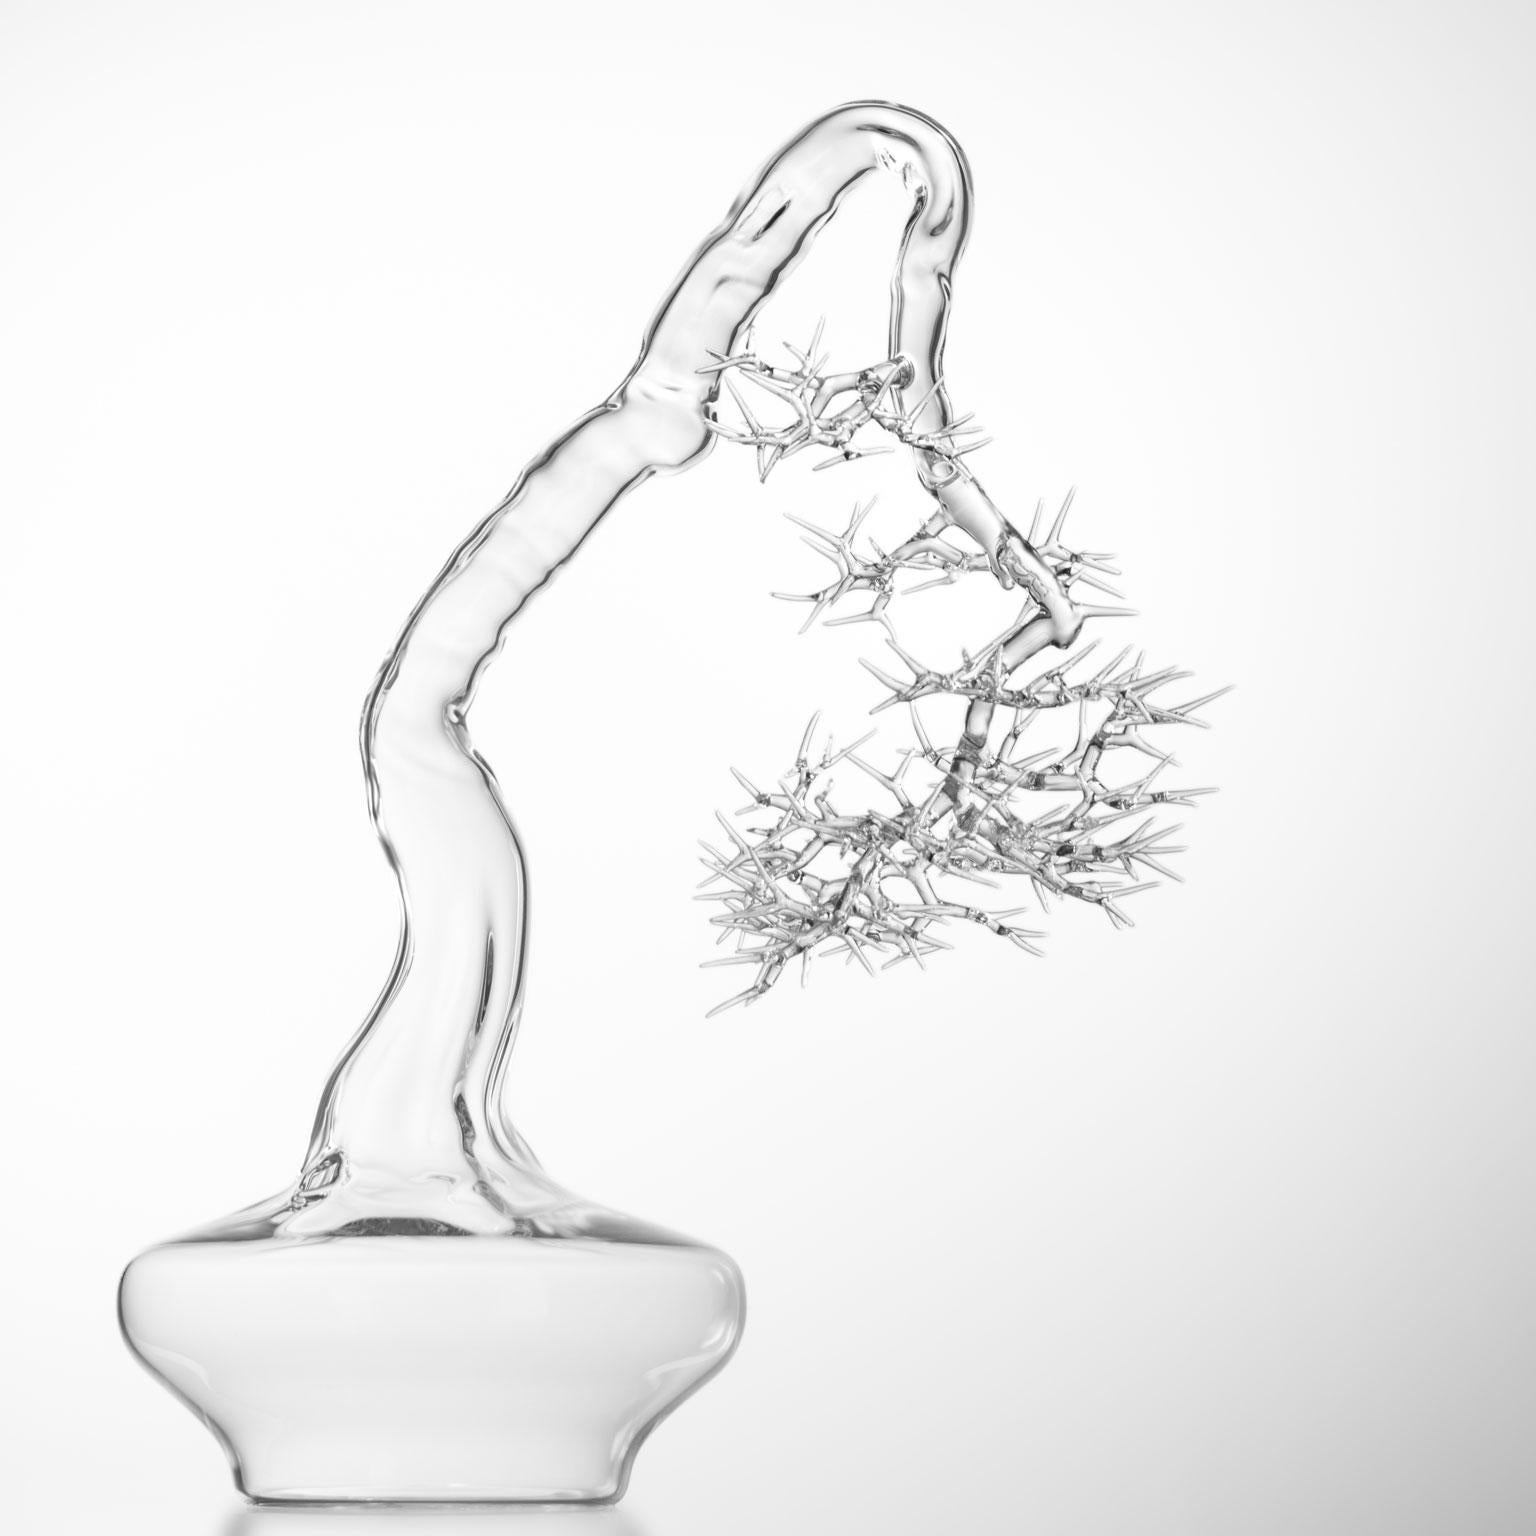 Hand Blown Glass Bonsai Sculpture 2023#04 by Simone Crestani

Hand-blown glass sculpture representing a bonsai tree.

Artist: Simone Crestani
Material: Borosilicate glass
Technique: Flameworking
Unique piece
Year: 2023
Measures: Height 22.04'',